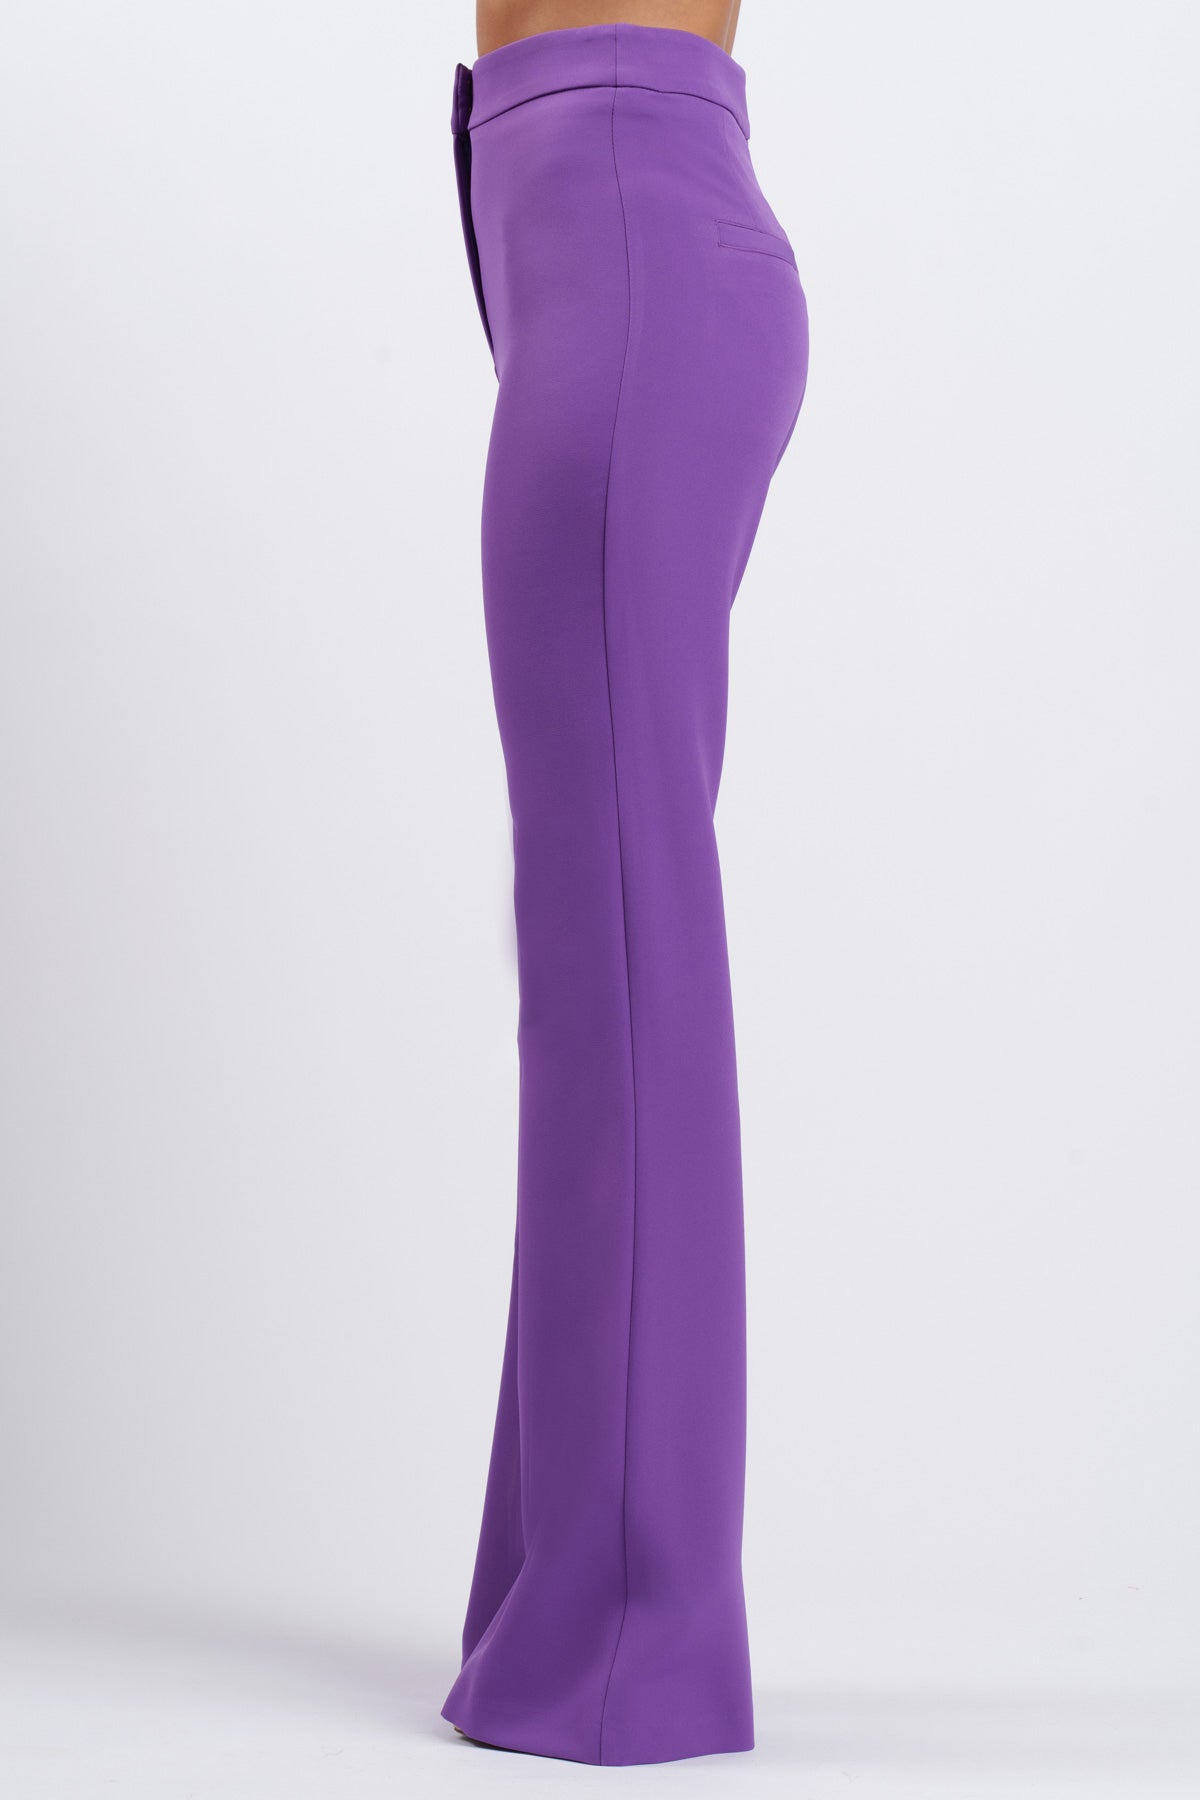 Libra Violet Half Leg Pants